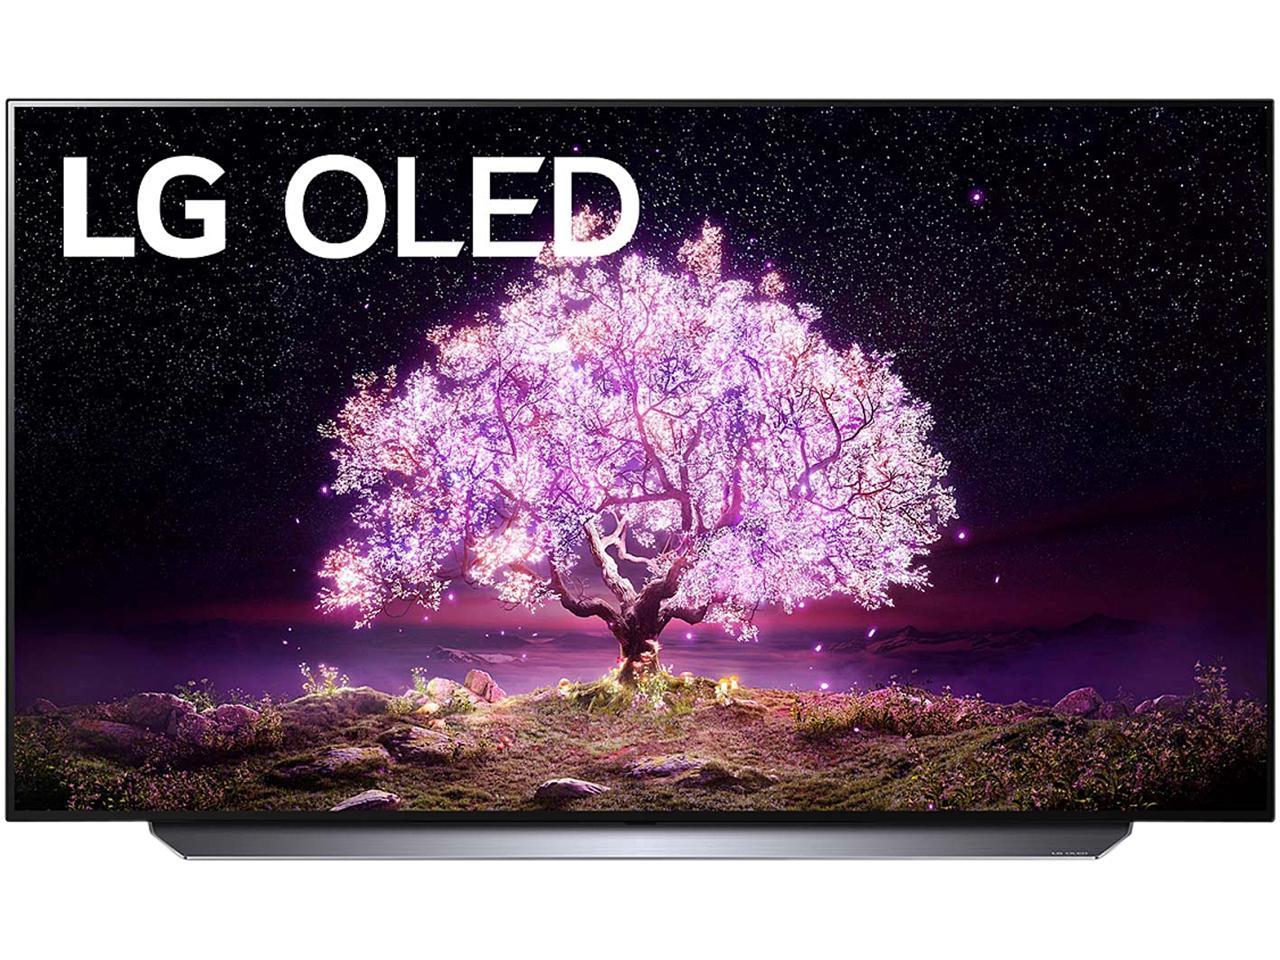 LG 48" OLED48C1PUB 4K Smart OLED TV + $75 VISA GC + 4 Year Warranty w/ Burn in Coverage $1096.99 + Free Shipping